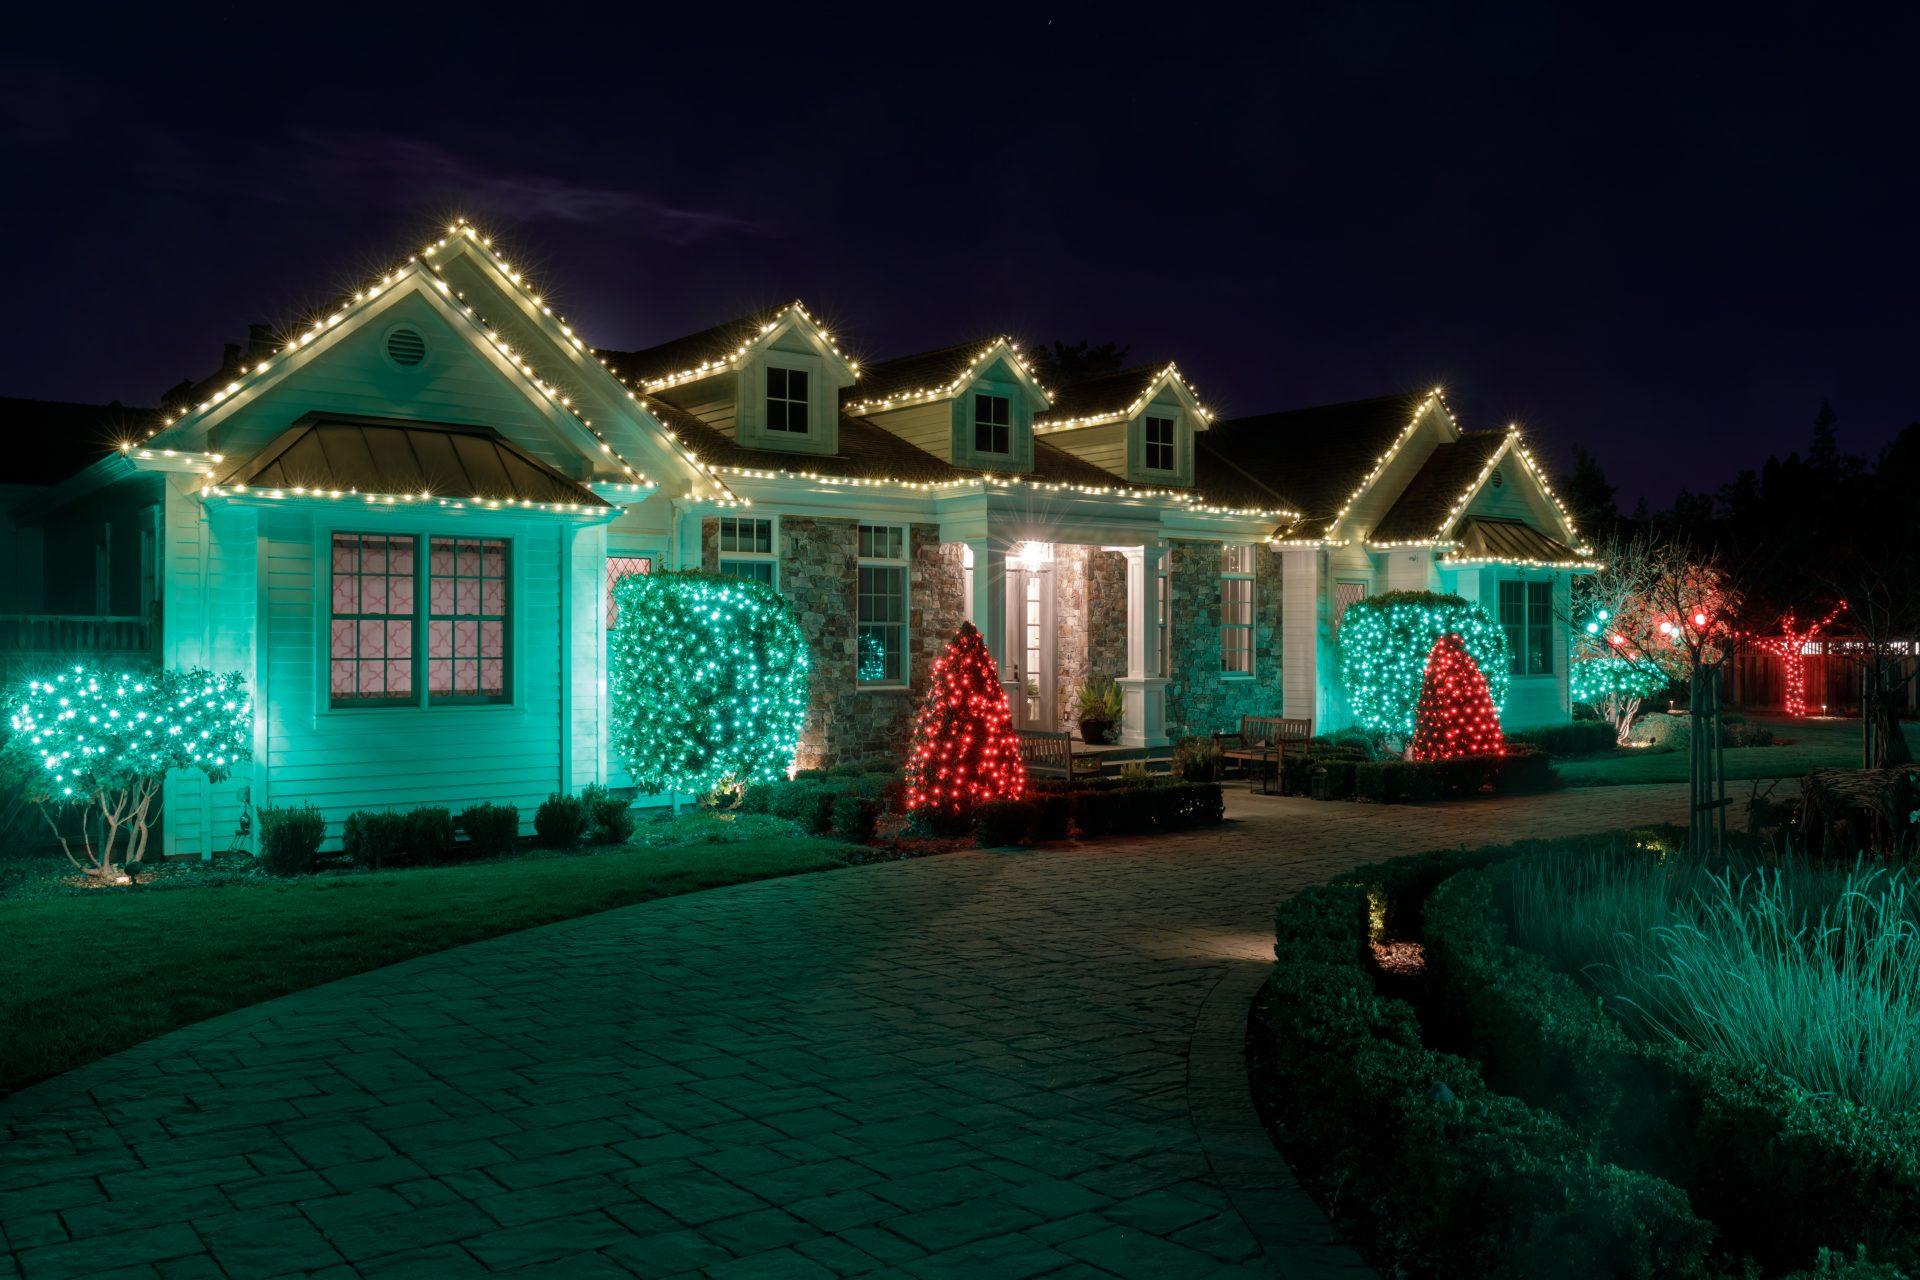 Los Altos, California - December 1, 2020: Christmas night lights decorating house